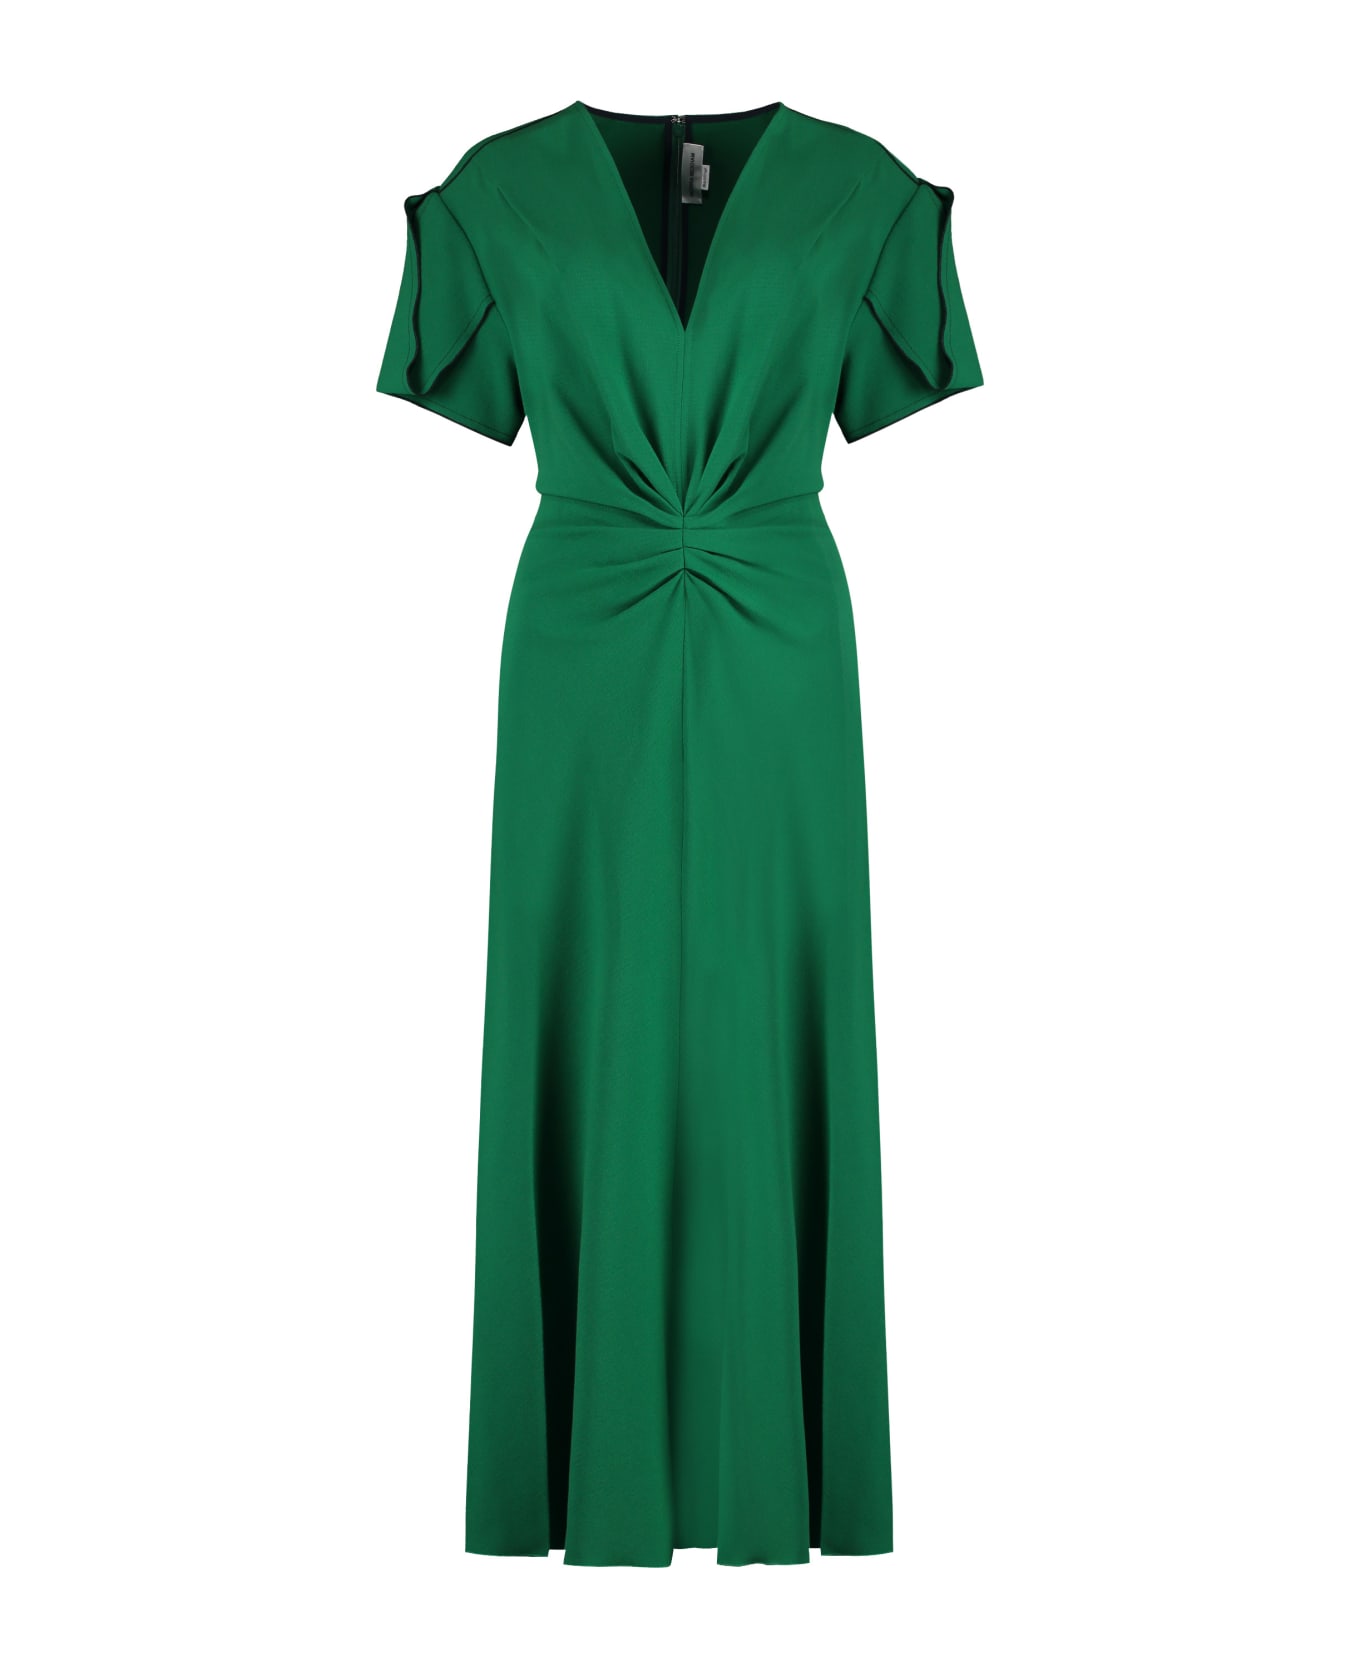 Victoria Beckham Crepe Dress - green